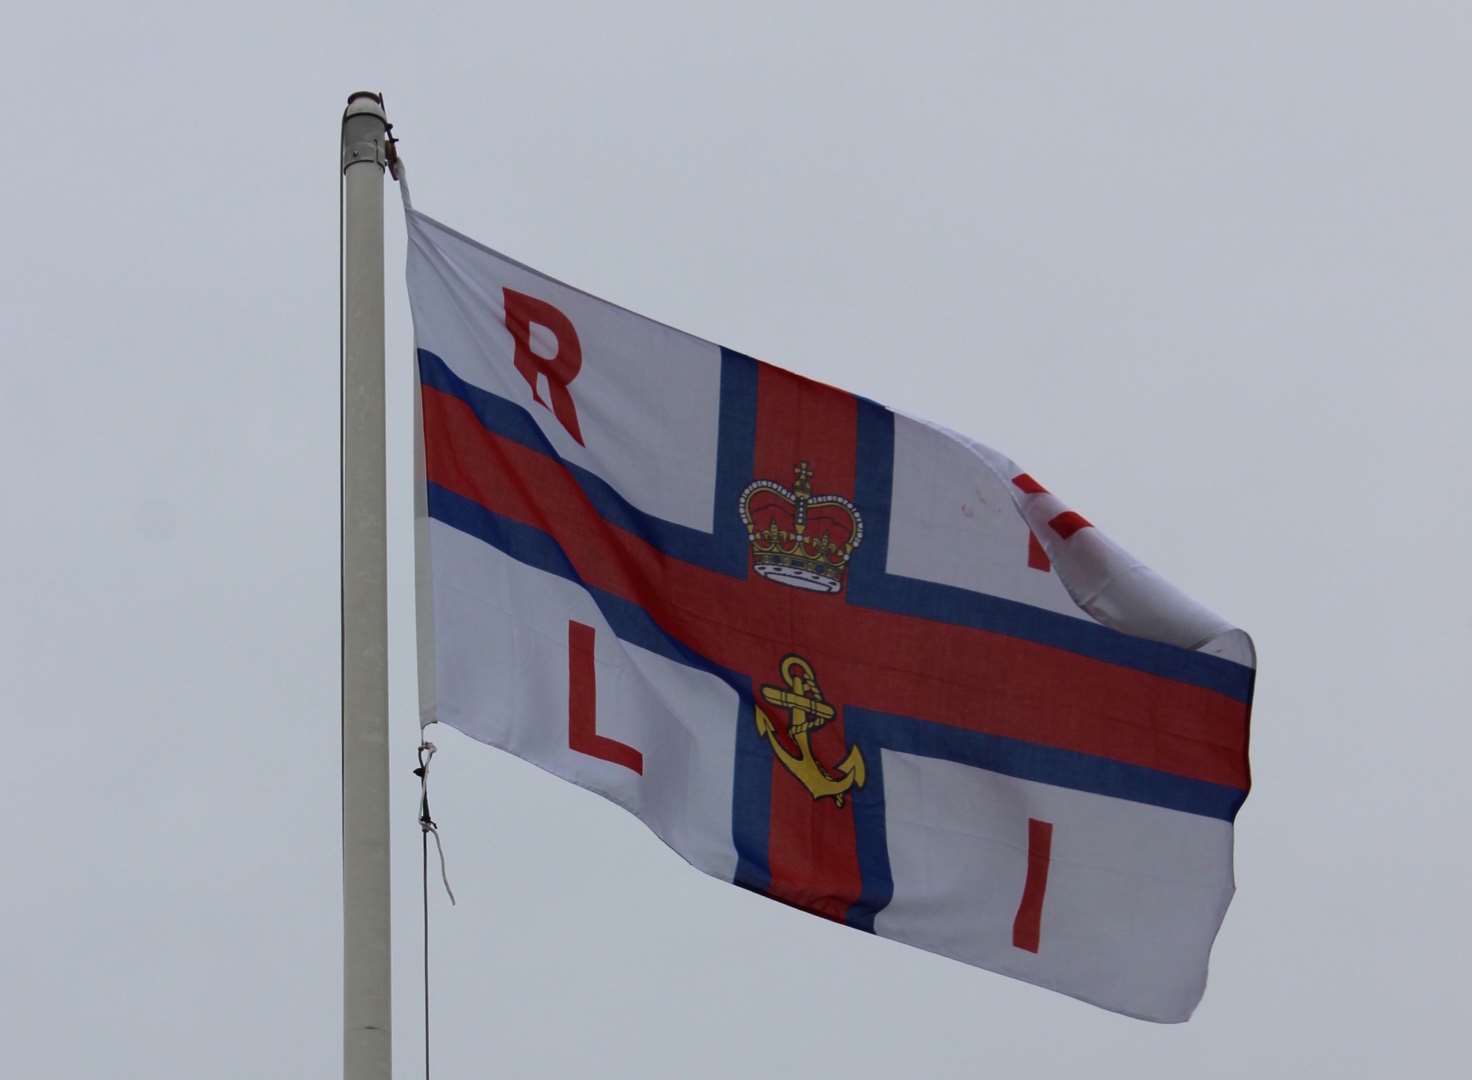 The RNLI flag